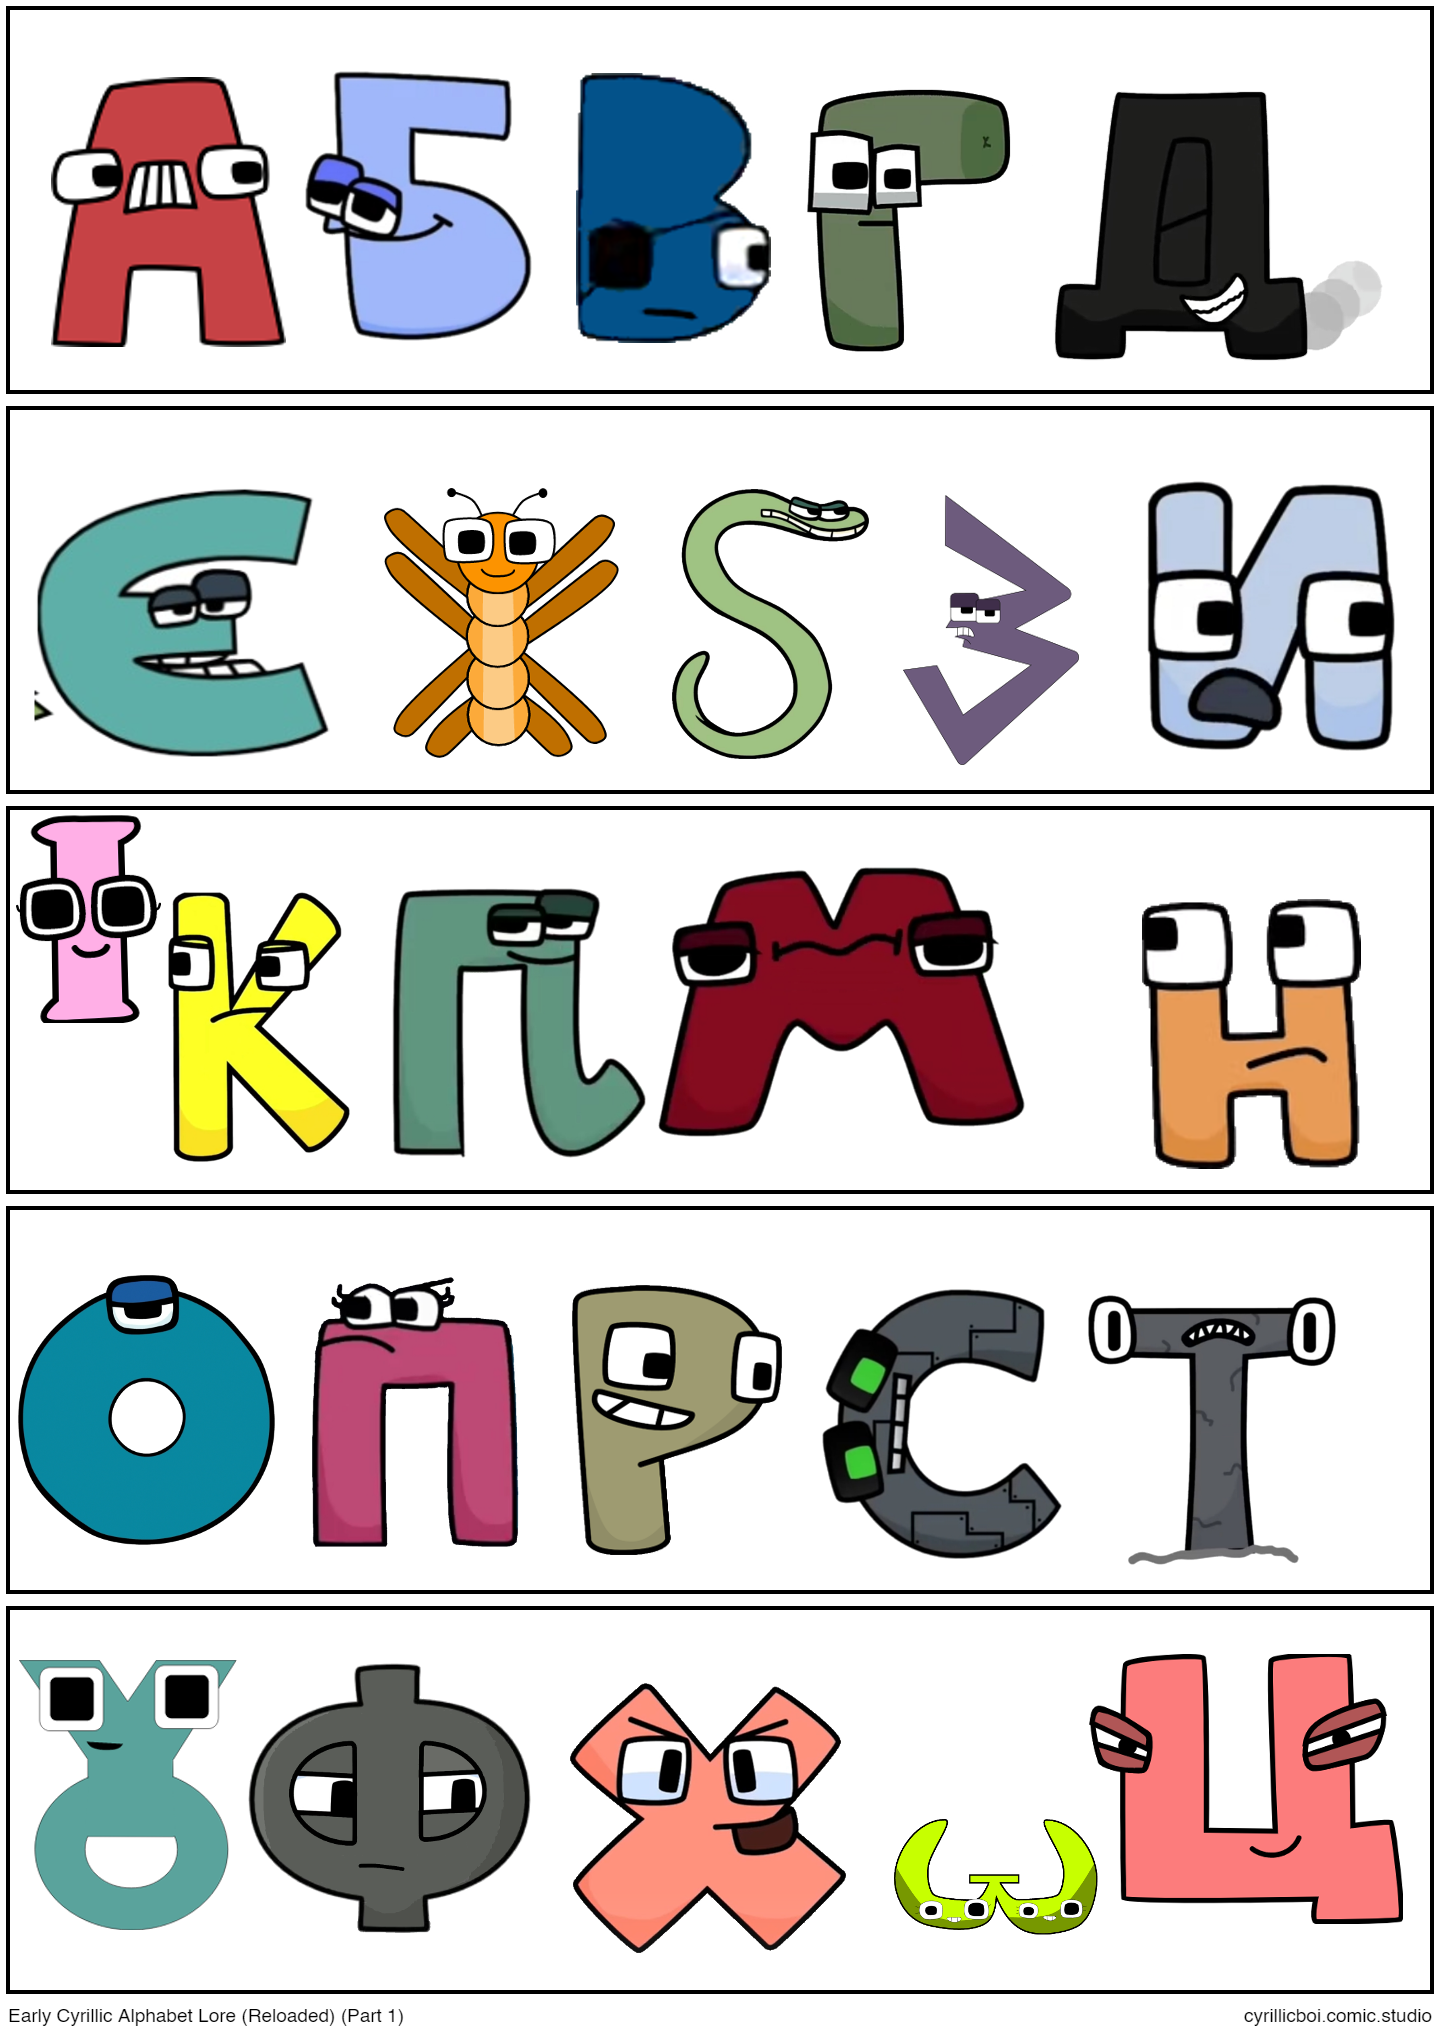 Baby Russian alphabet lore reloaded - Comic Studio